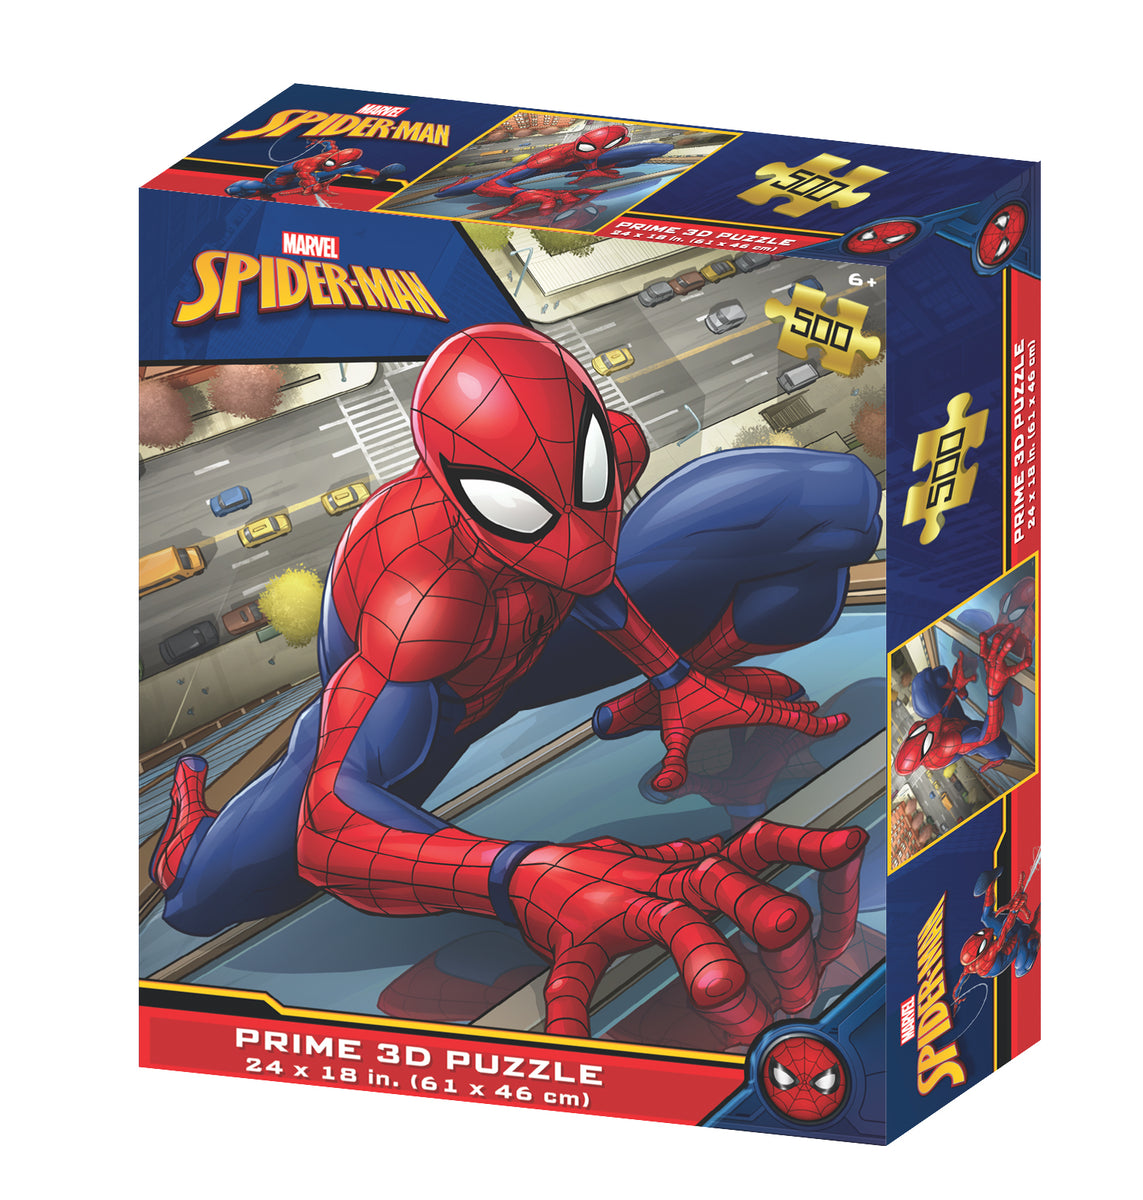 Puzzlr Spider-man Marvel 3D Jigsaw Puzzle 35586 300pc 12x18